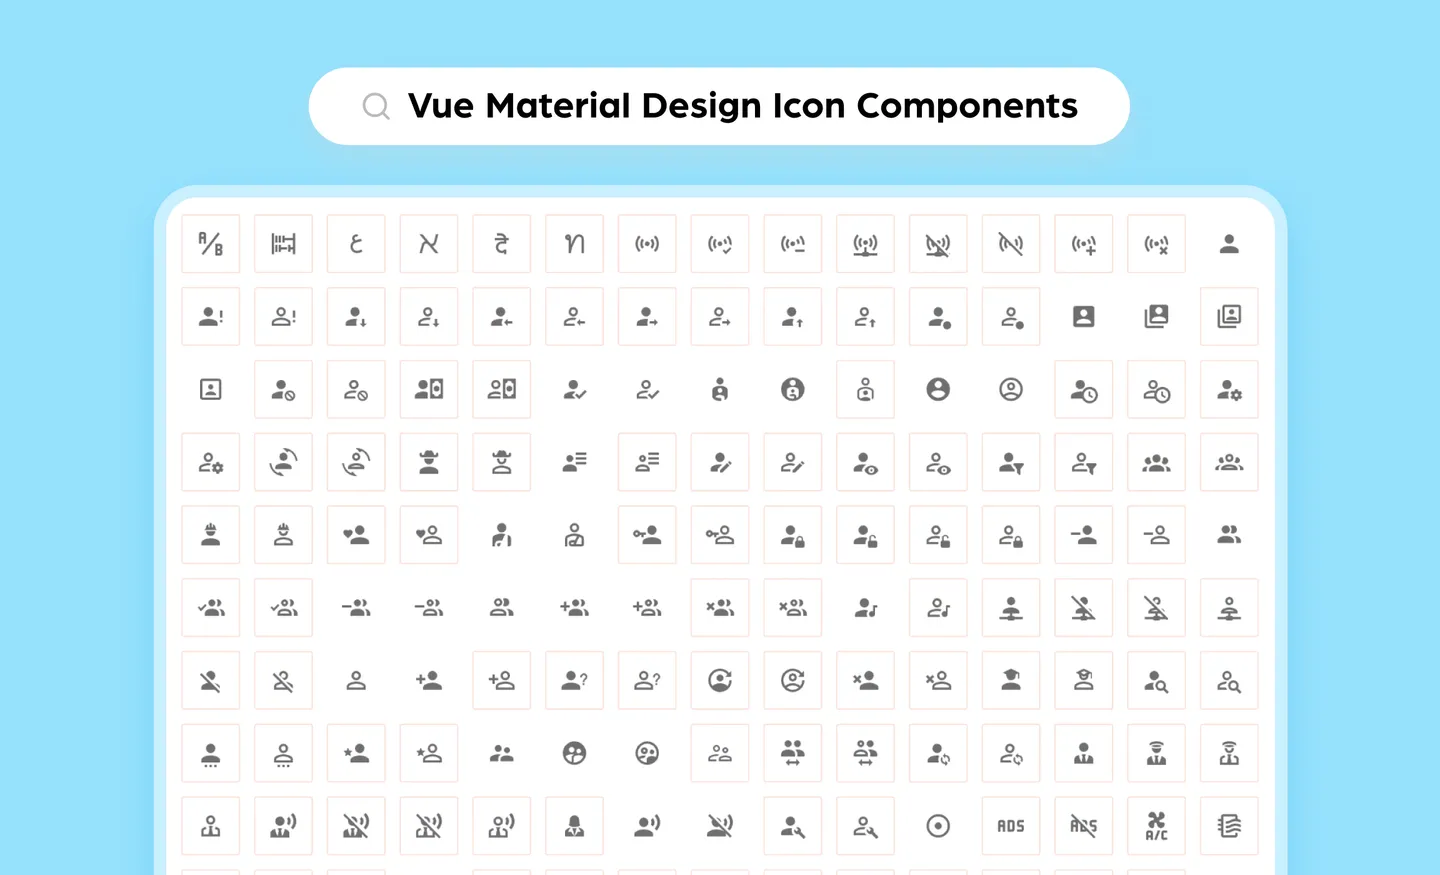 Vue Material Design icons